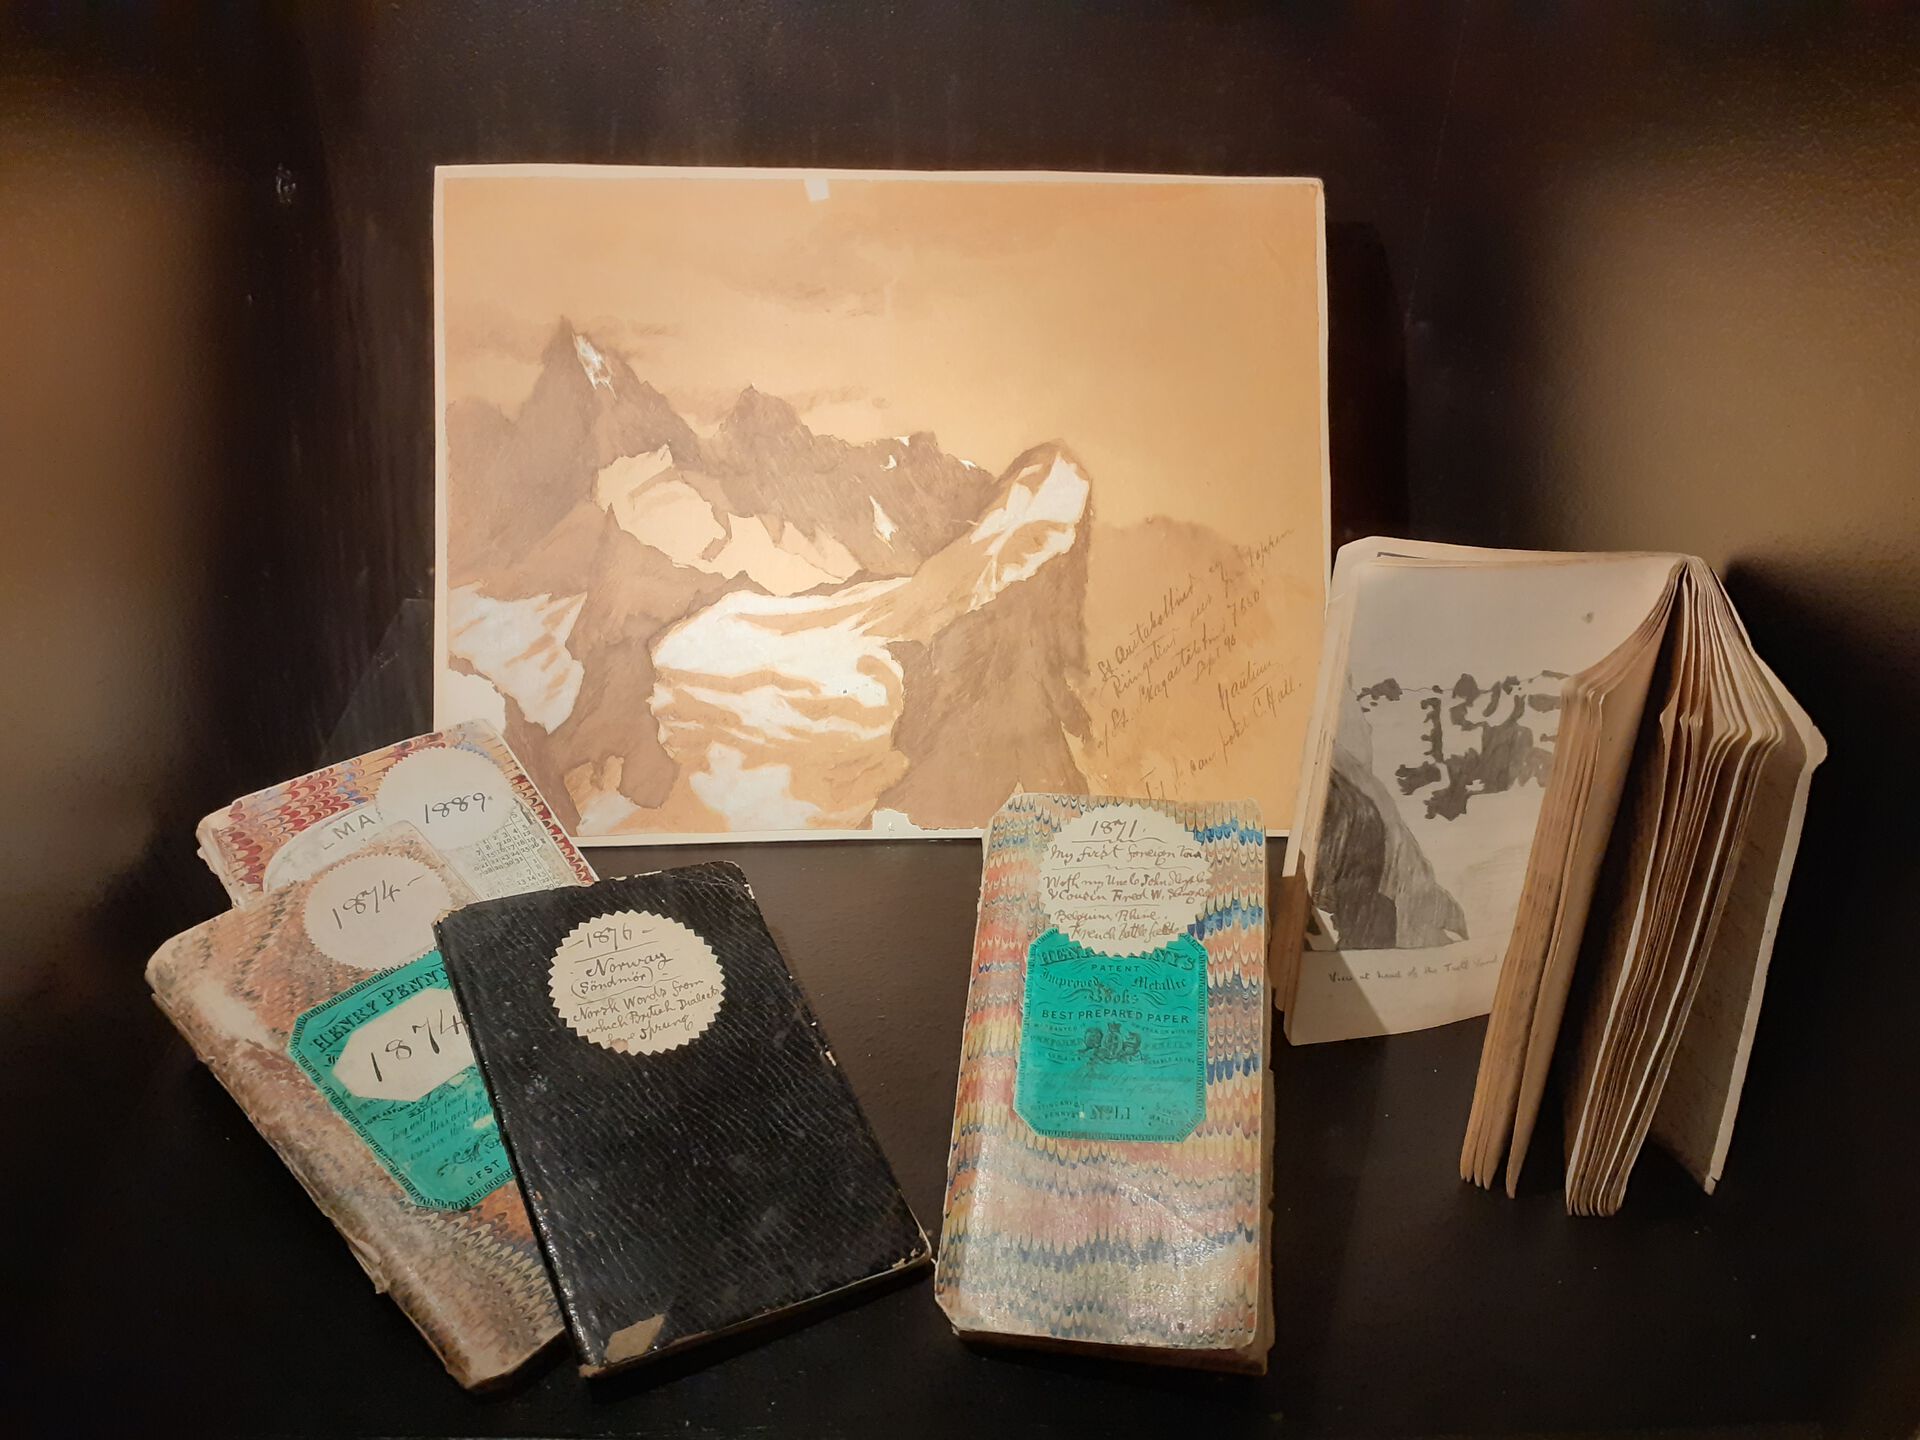 W.C. Slingsby's notebooks